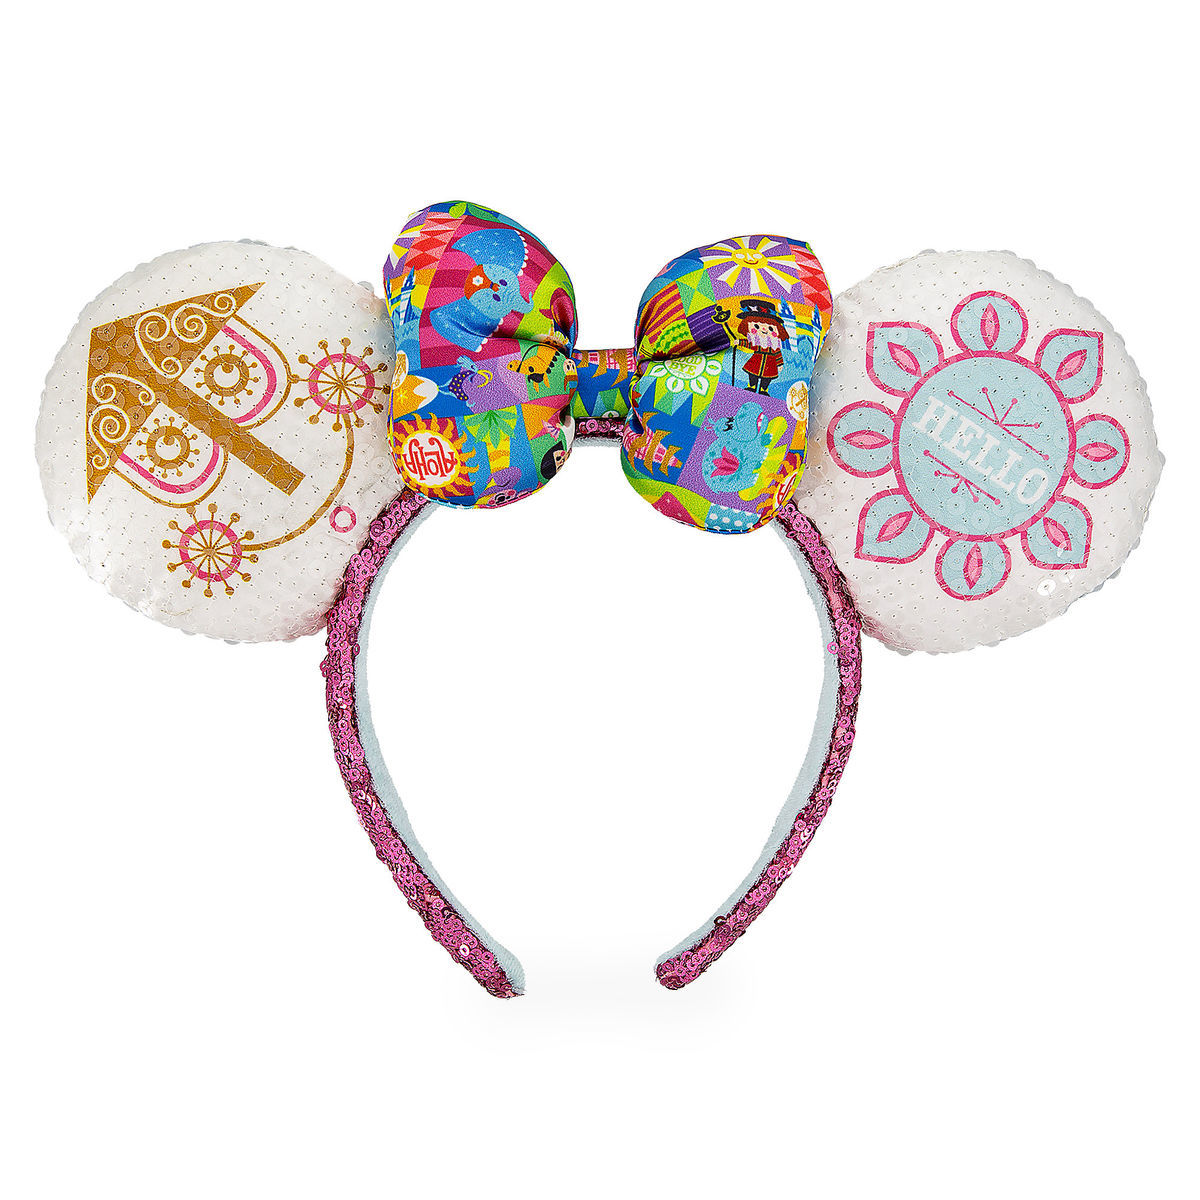 Disney Ears Headband - Minnie Mouse - It's a Small World image